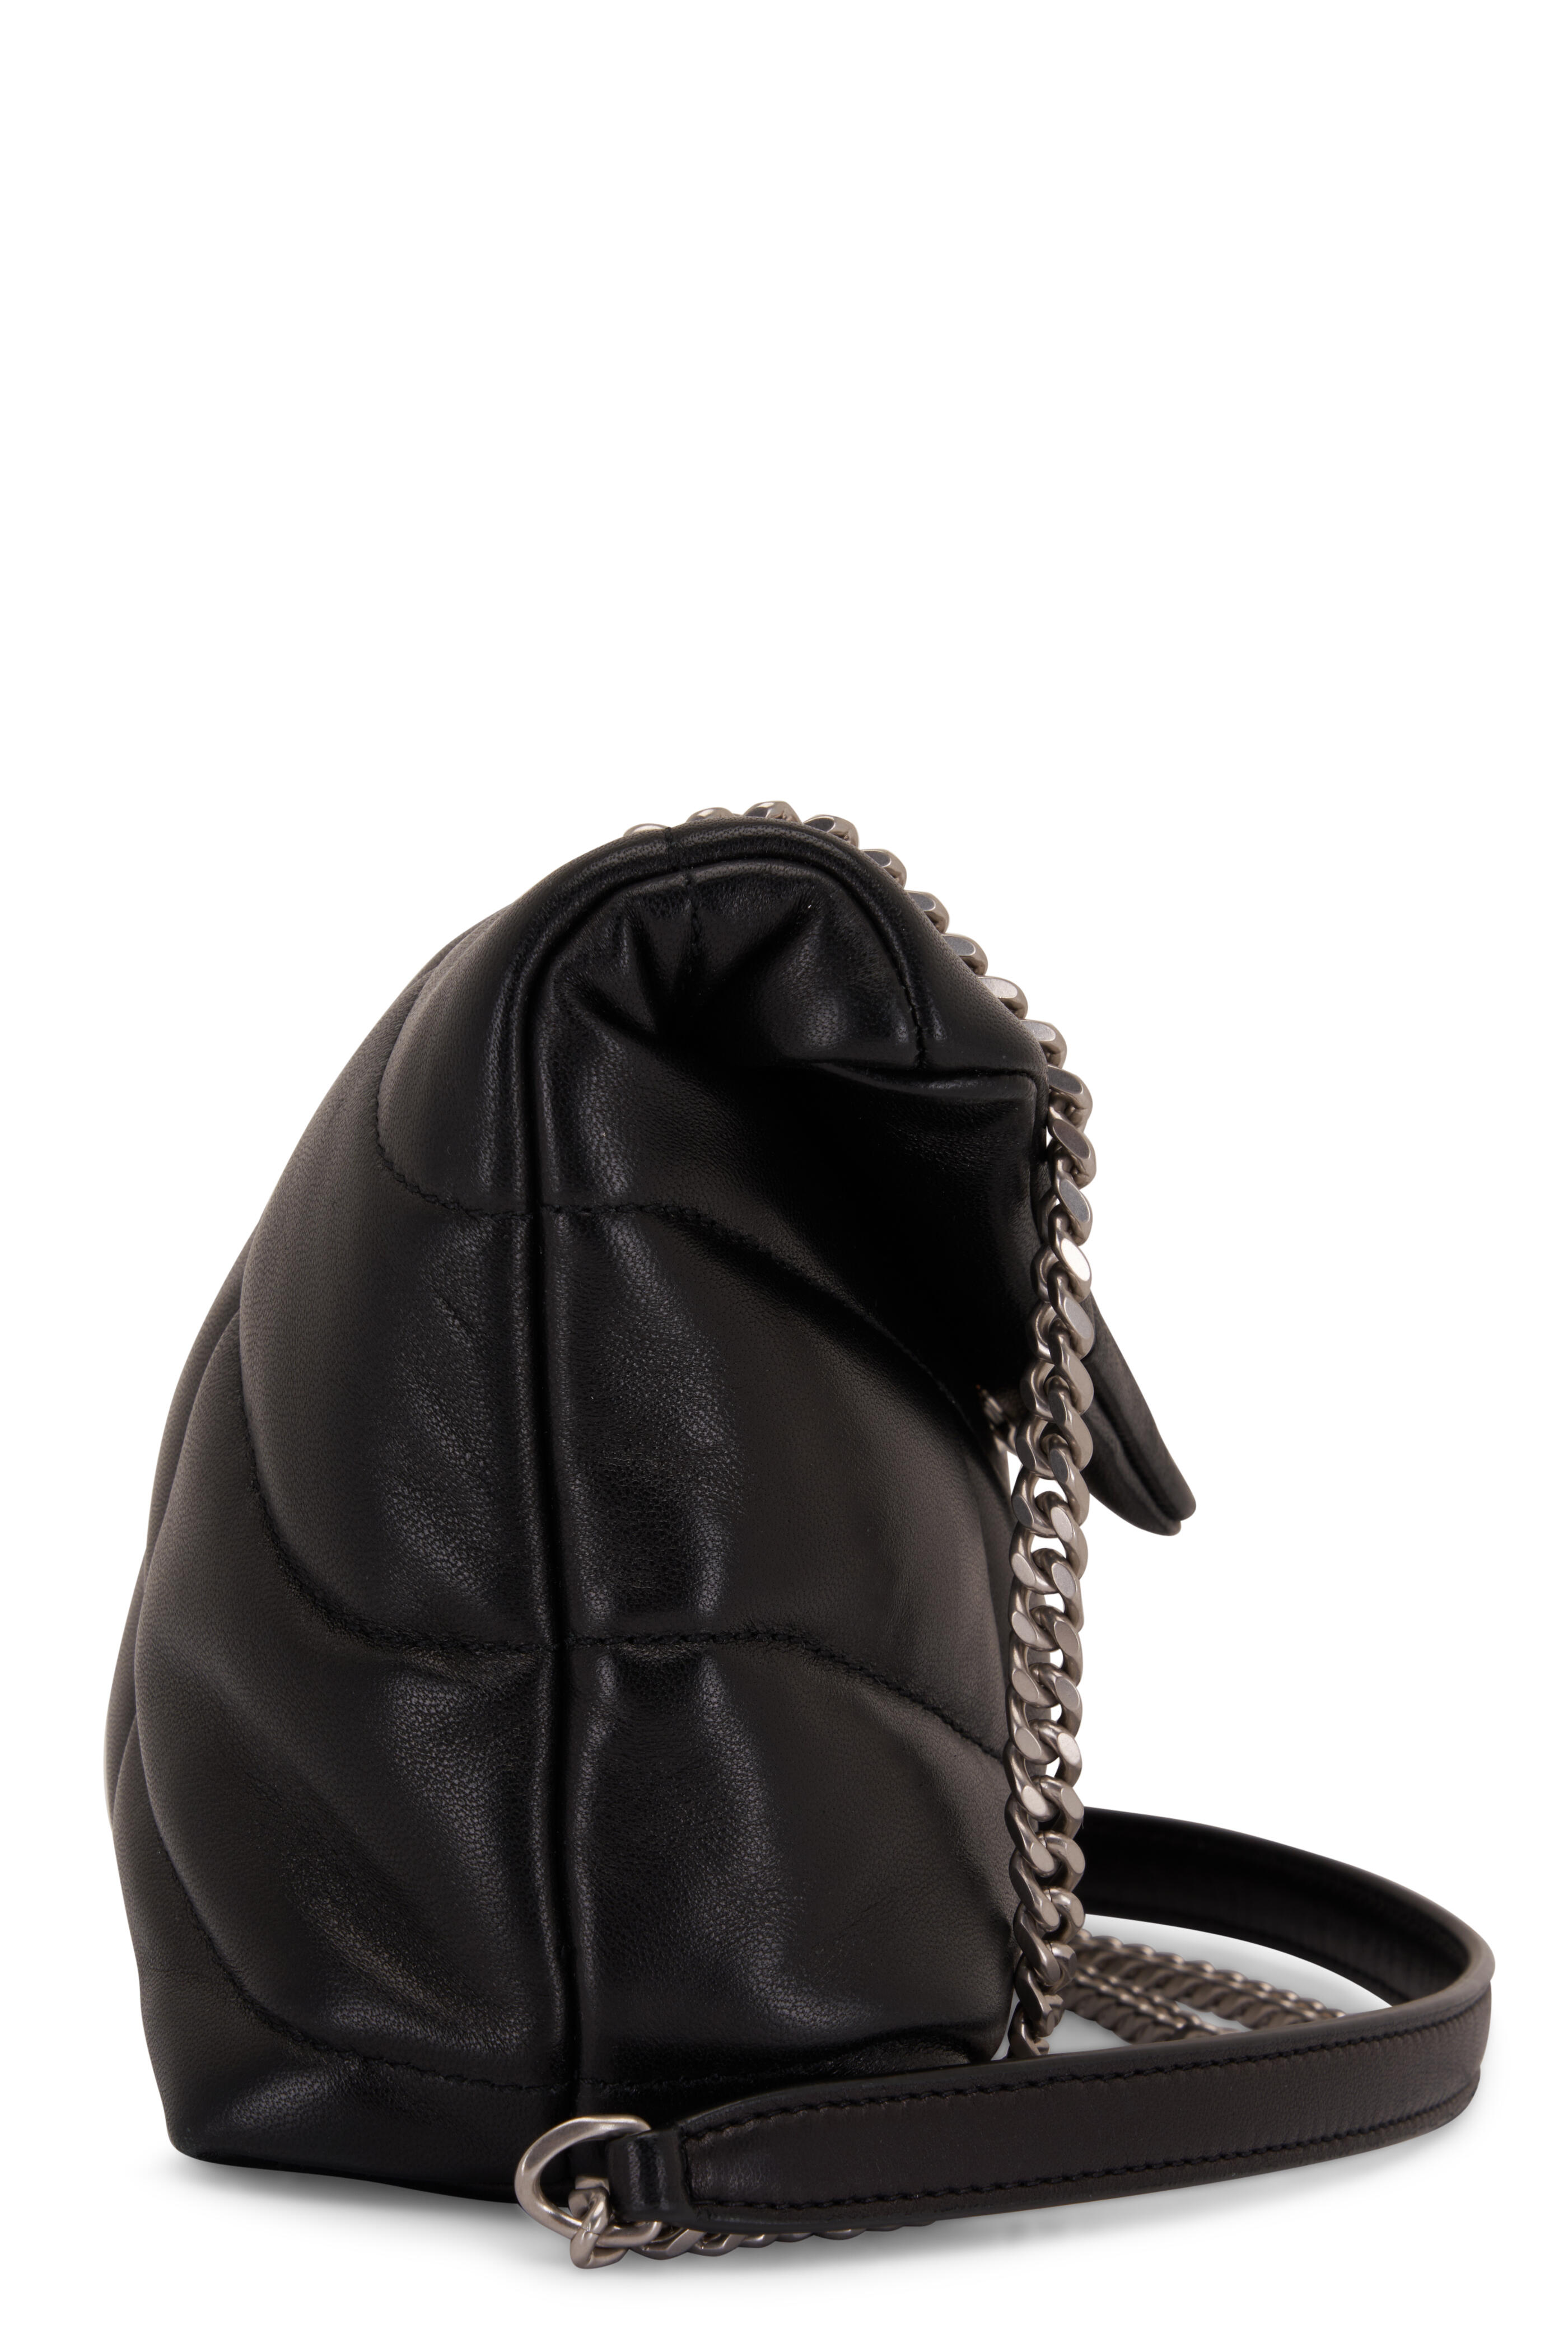 Saint Laurent - Mini Puffer Black Quilted Leather Shoulder Bag